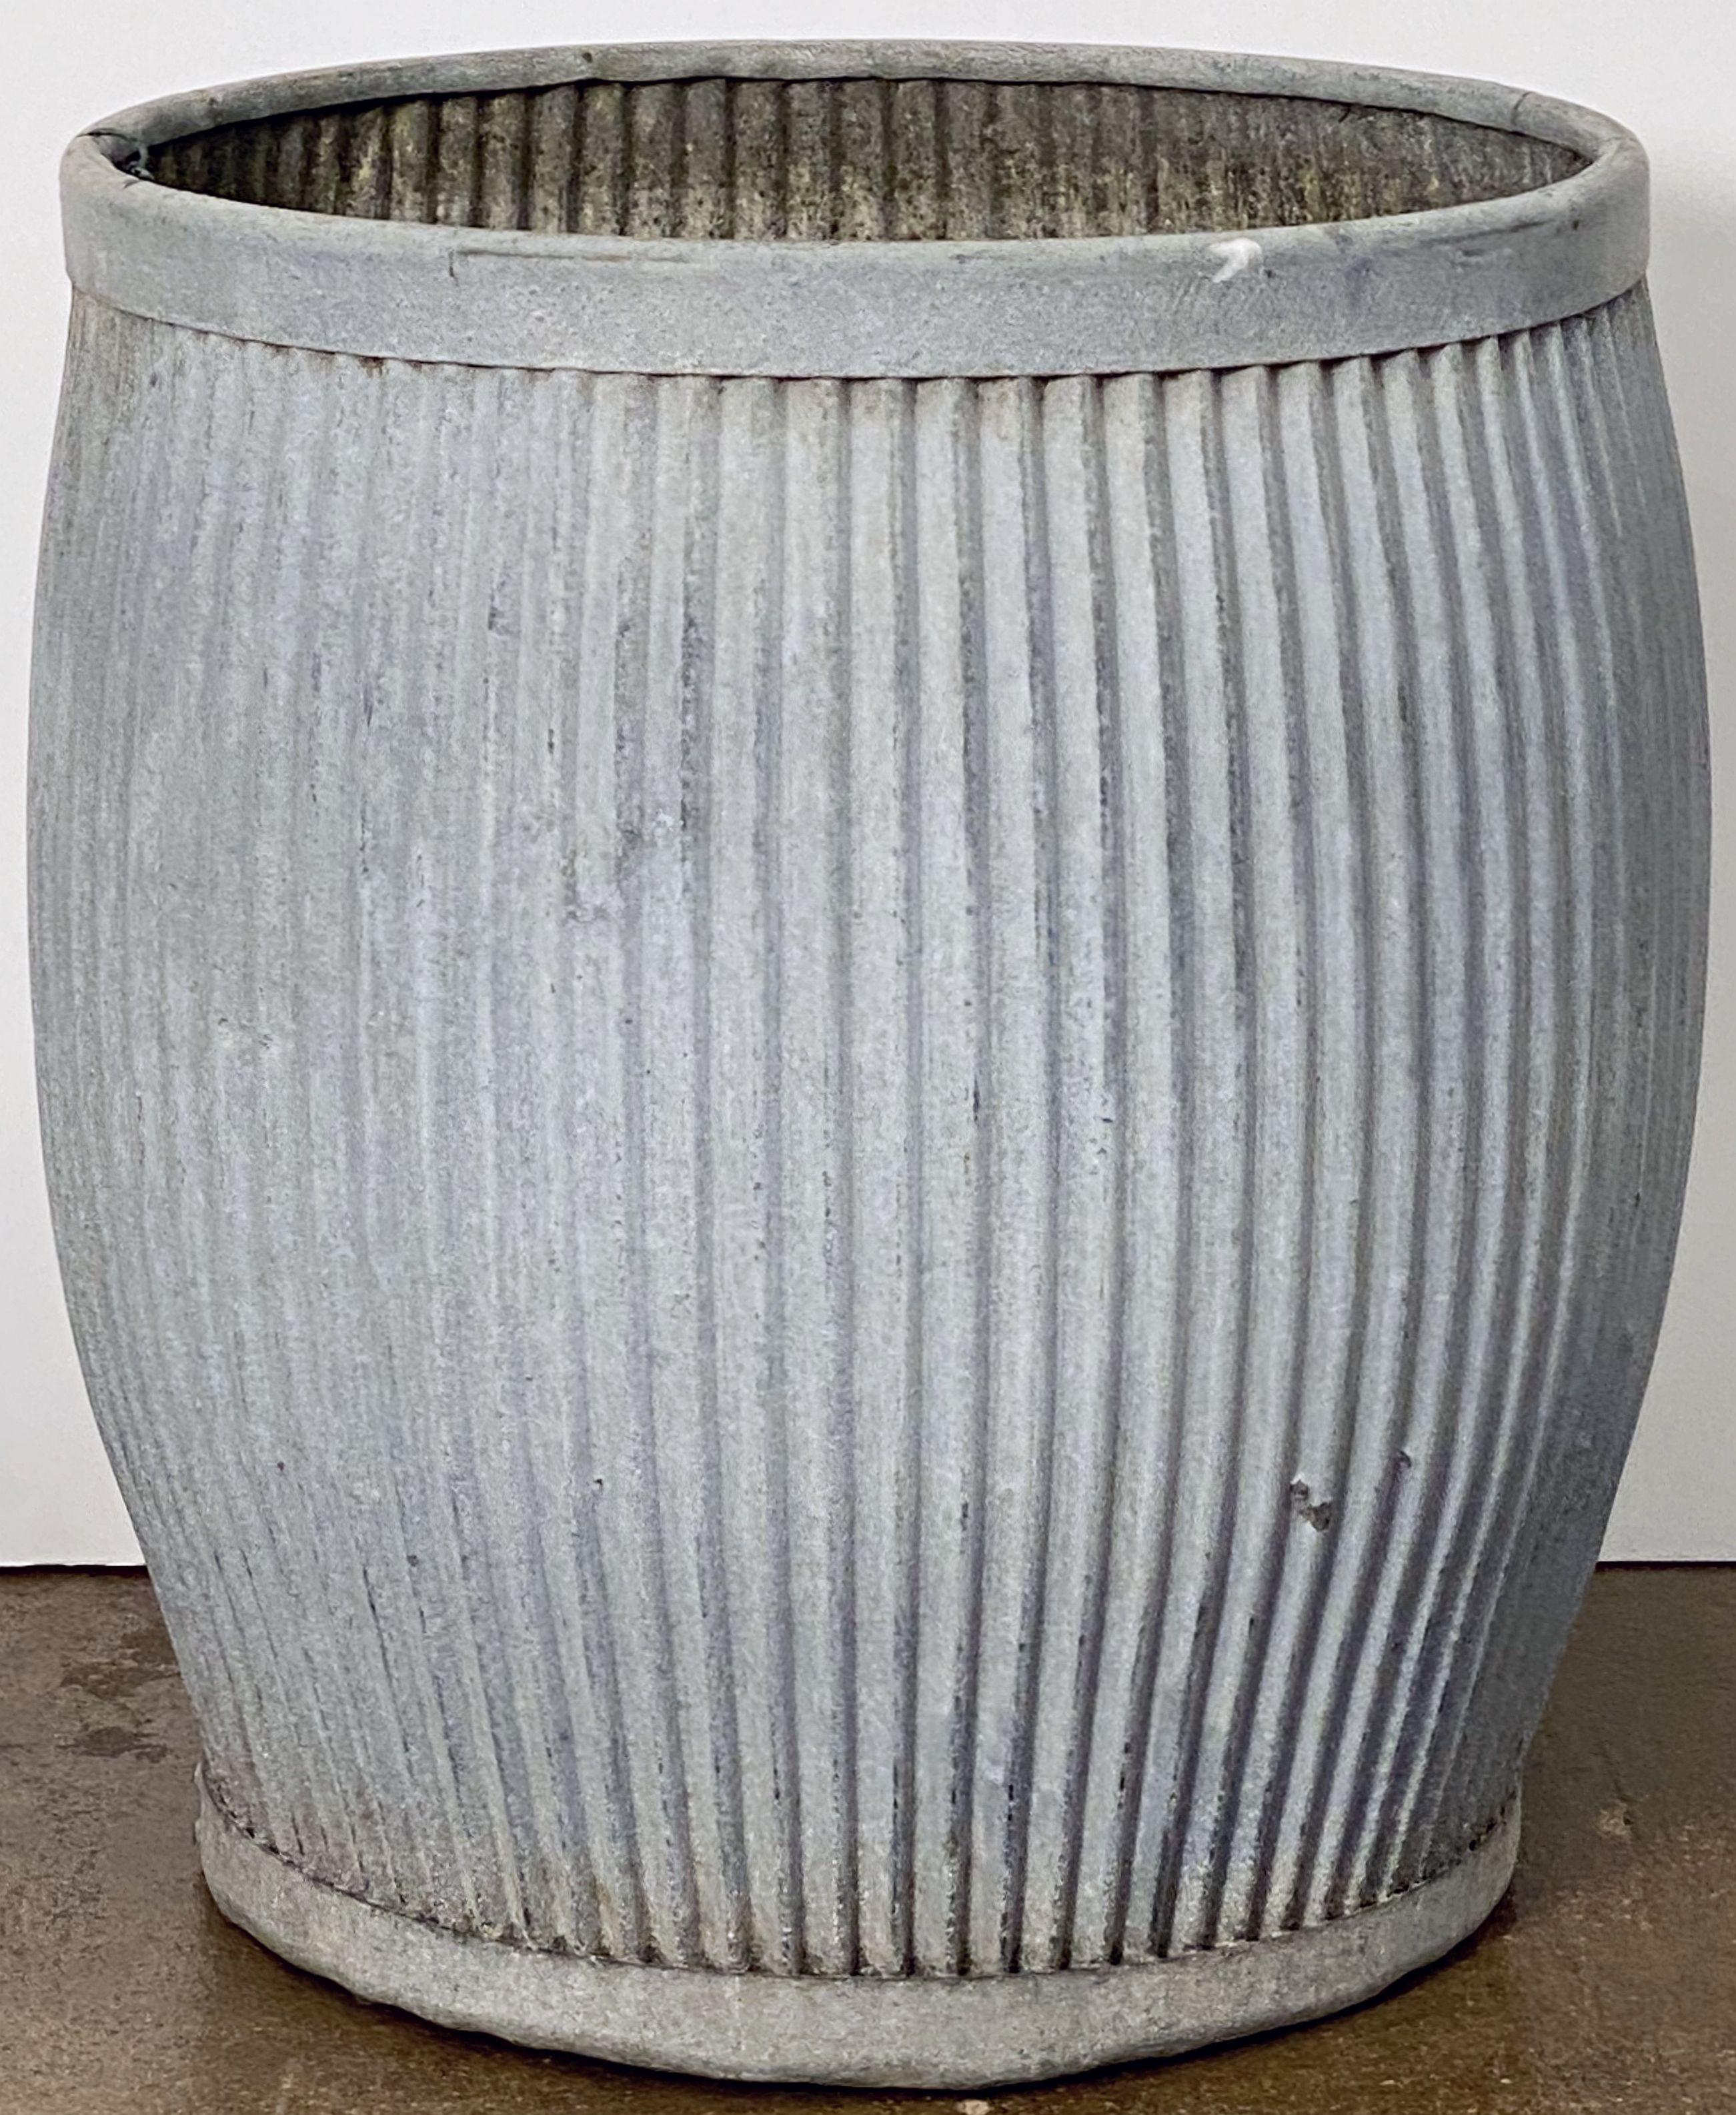 20th Century English Garden Pot or Dolly Tub Planter of Zinc